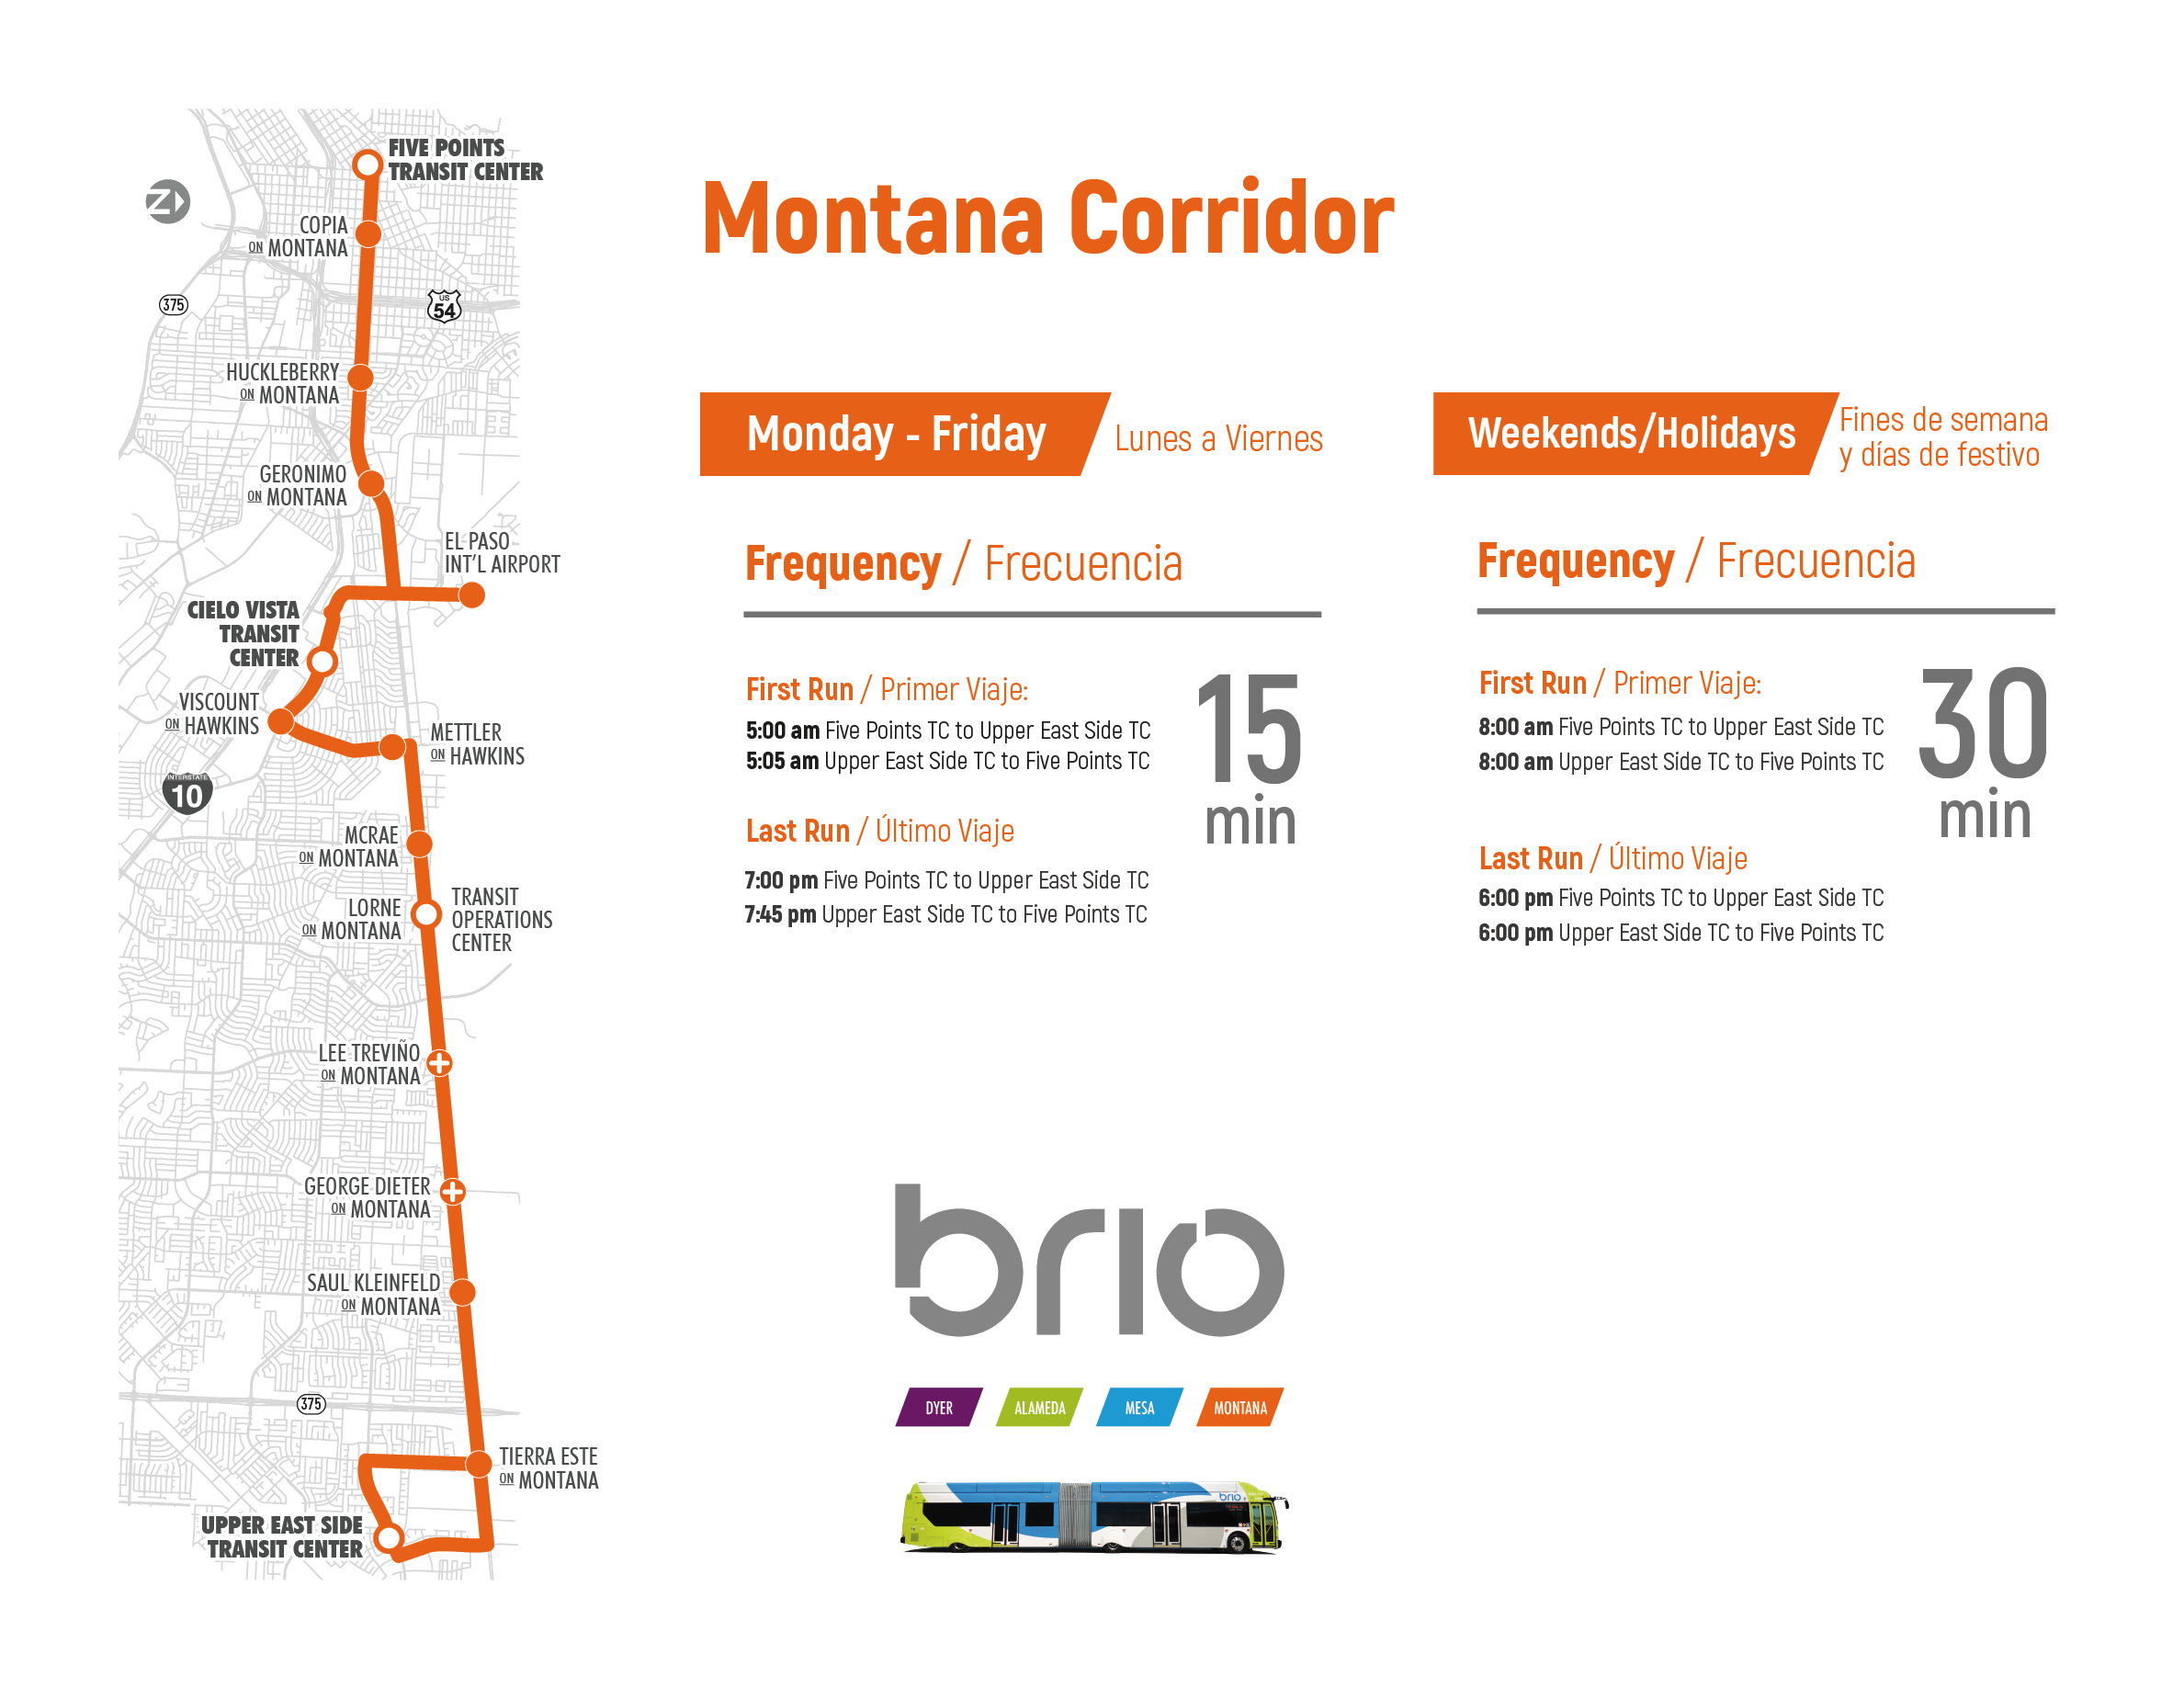 Image of Montana Corridor route